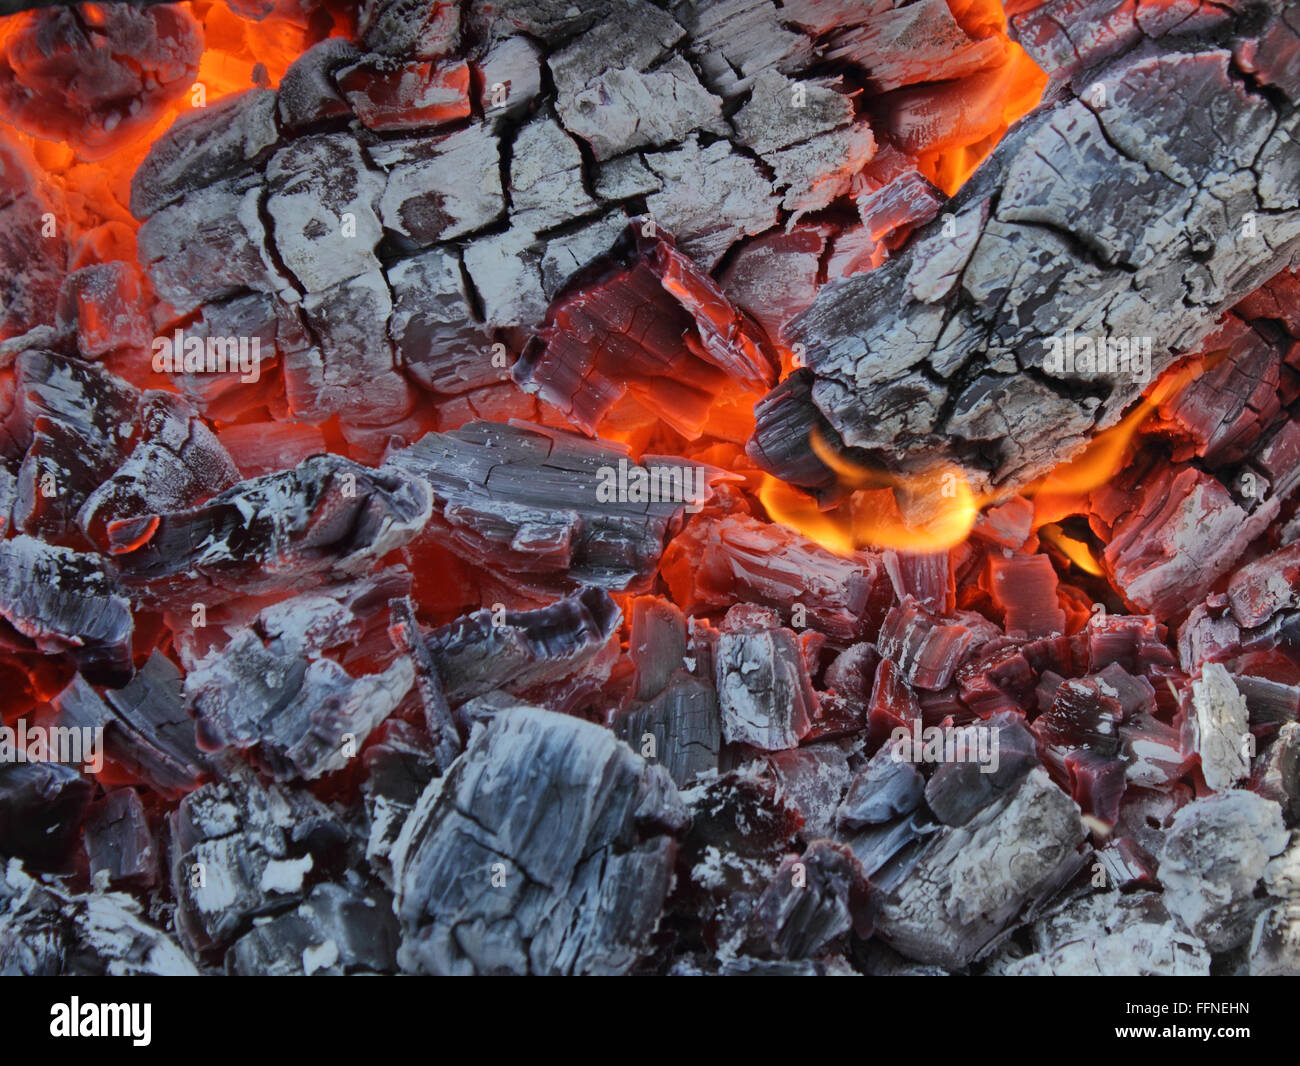 Hot live charcoal extreme closeup photo image Stock Photo